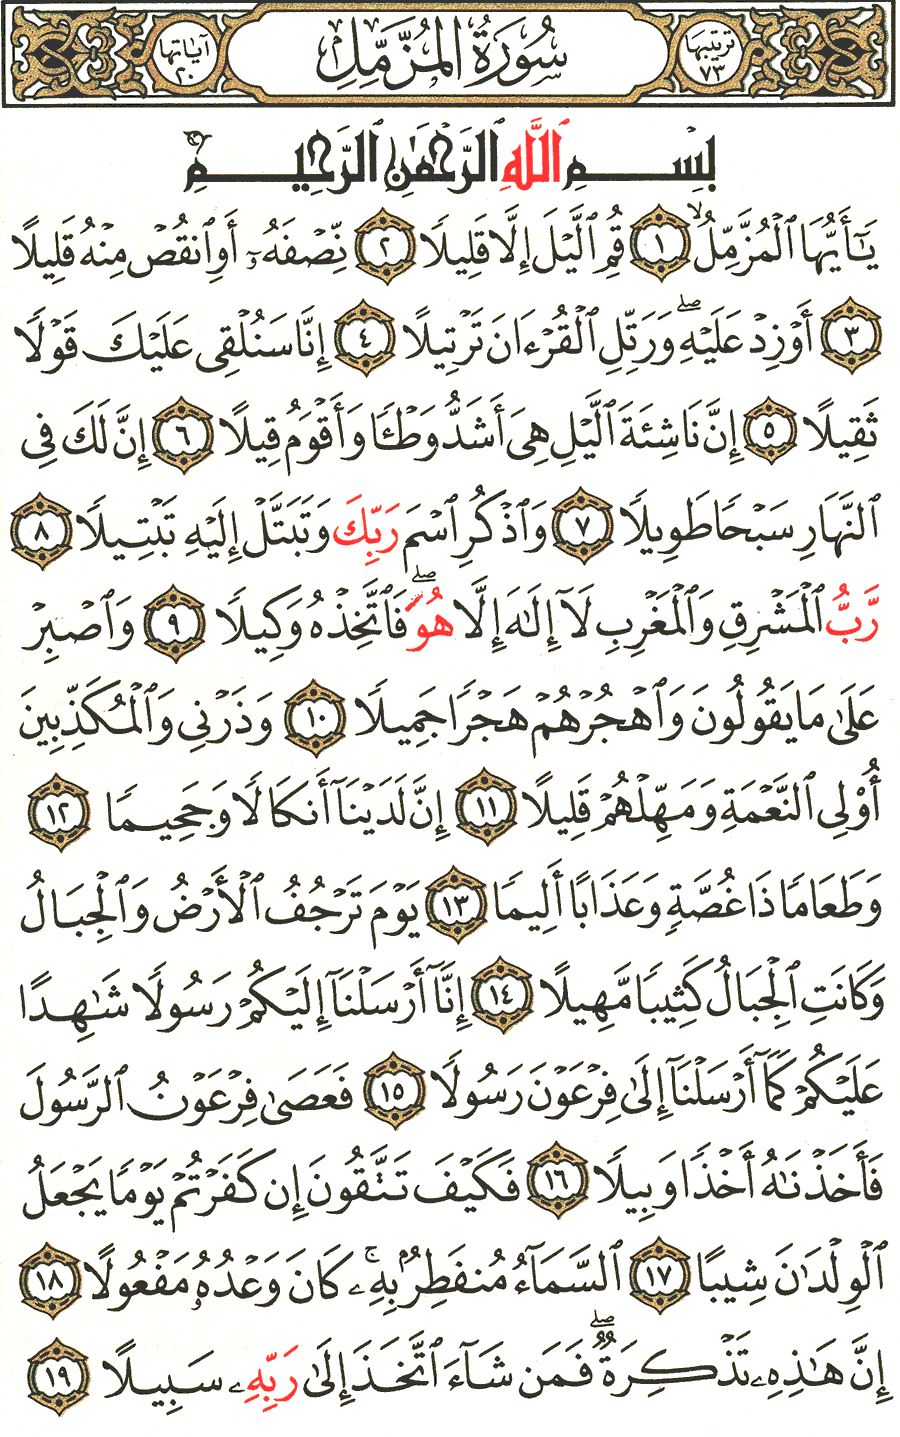 Surah Al-Muzzammil Hausa translation of the meaning